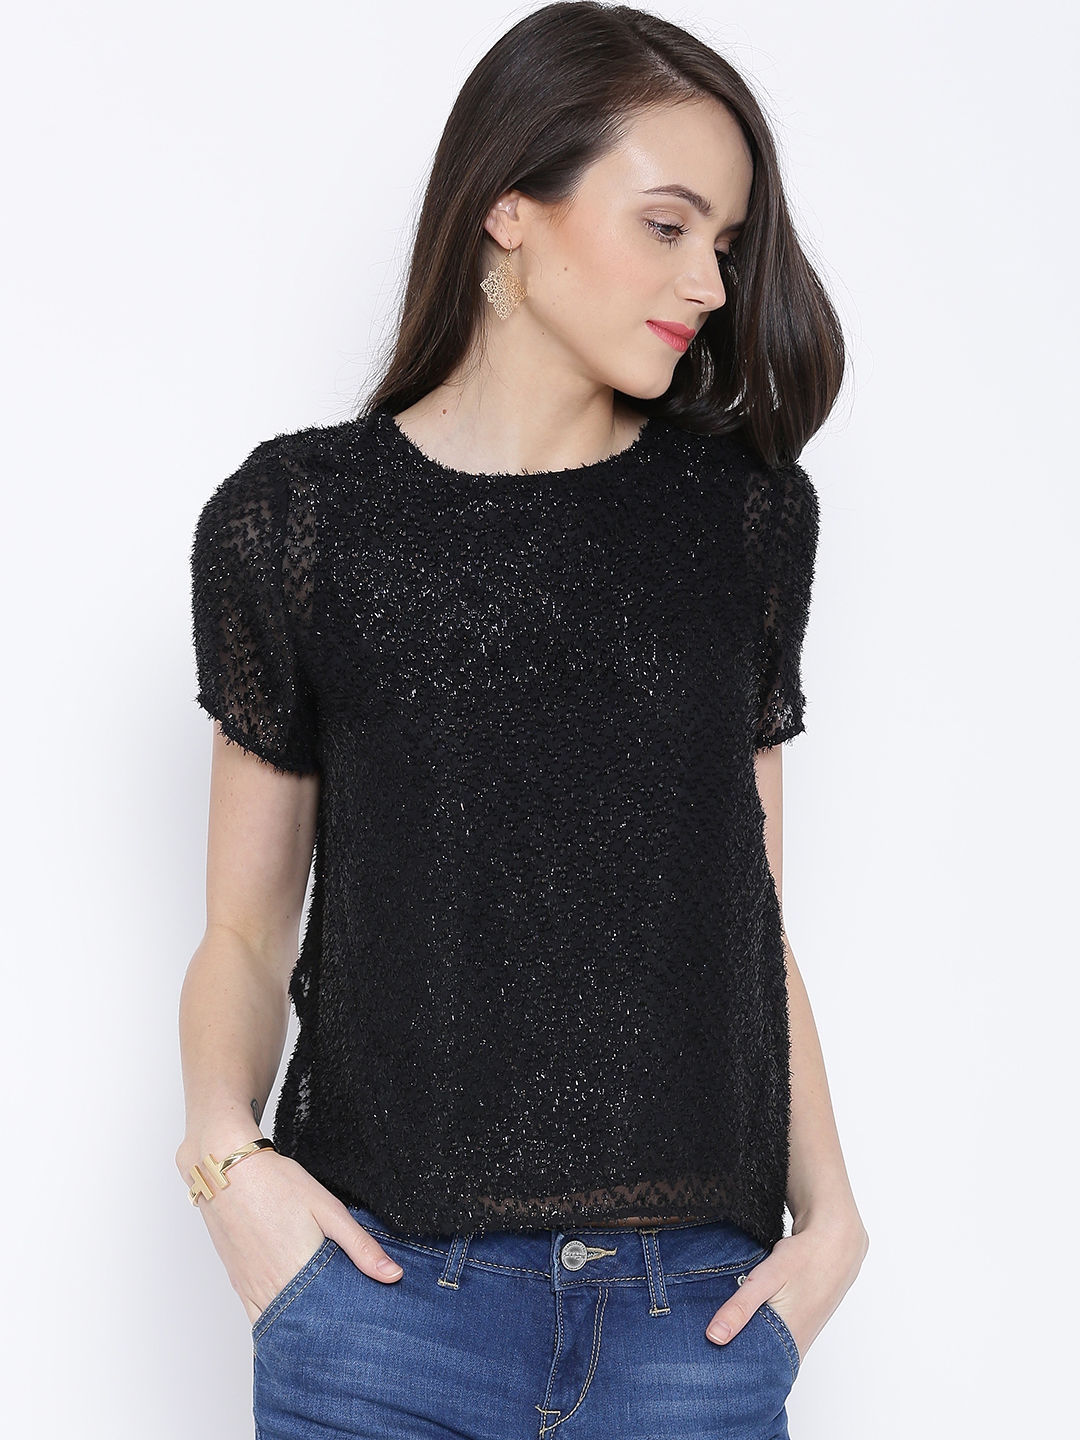 Buy Vero Moda Black Shimmer Layered Top - Tops for Women 1159178 | Myntra